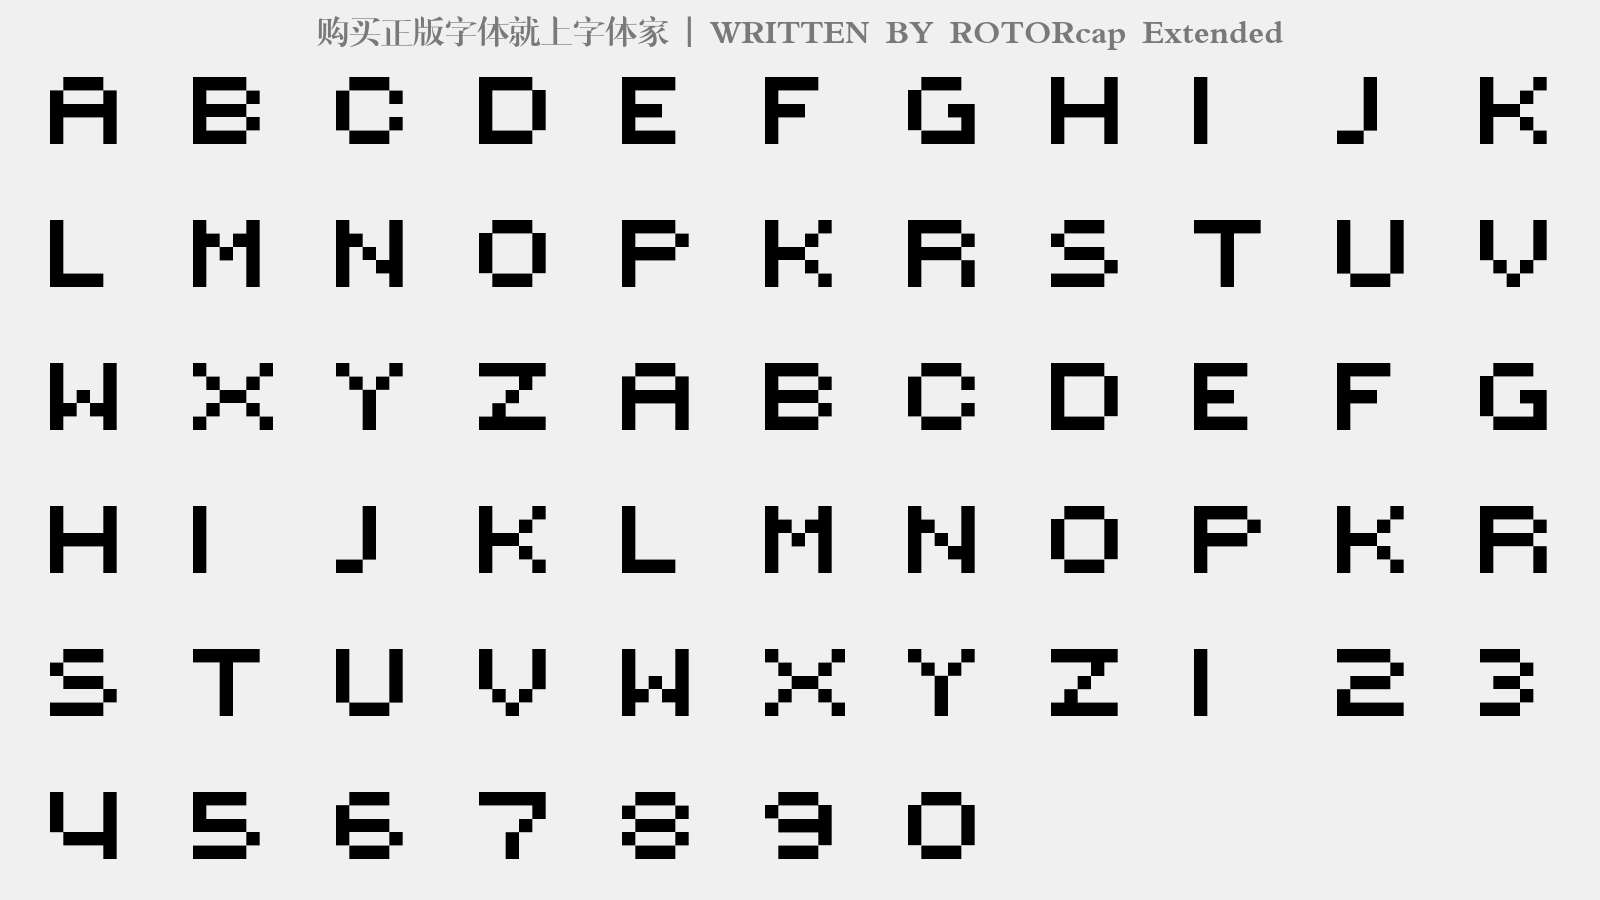 ROTORcap Extended - 大写字母/小写字母/数字